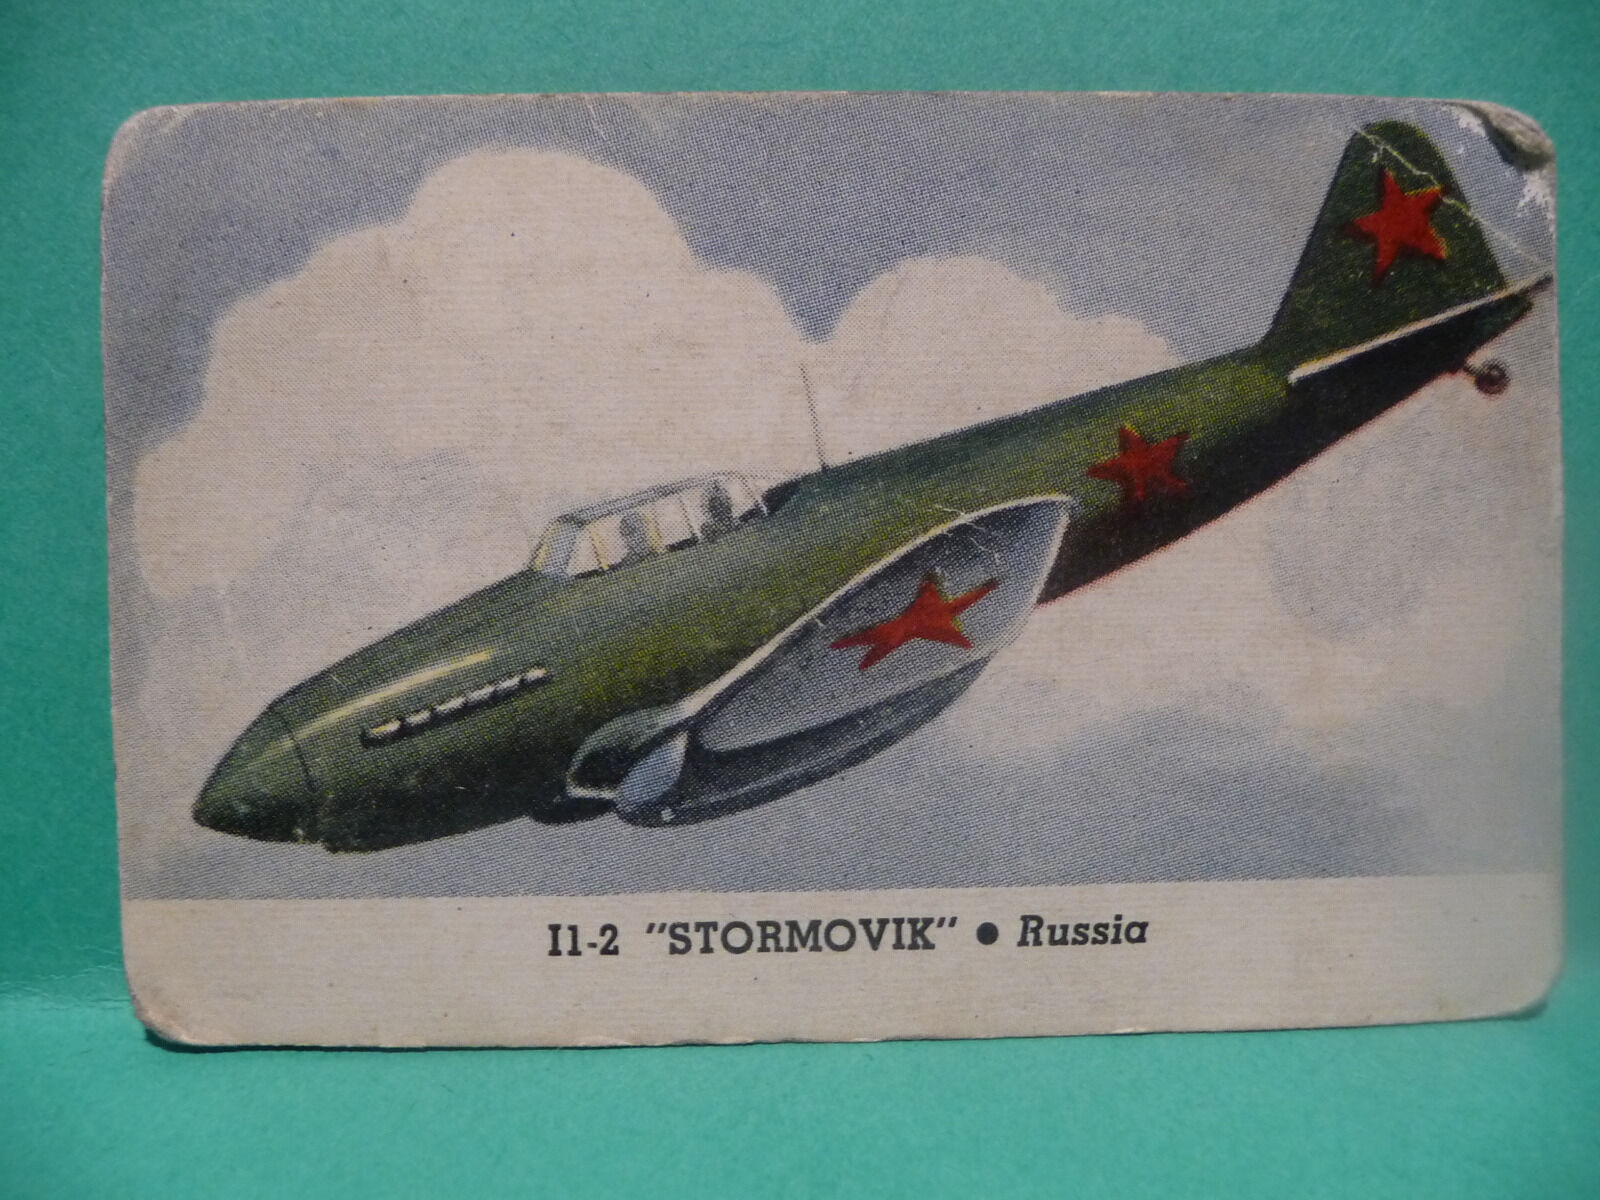 1940s Leaf Card Aeroplanes Trading Card I1-2 series D-27 Stormovik Russia